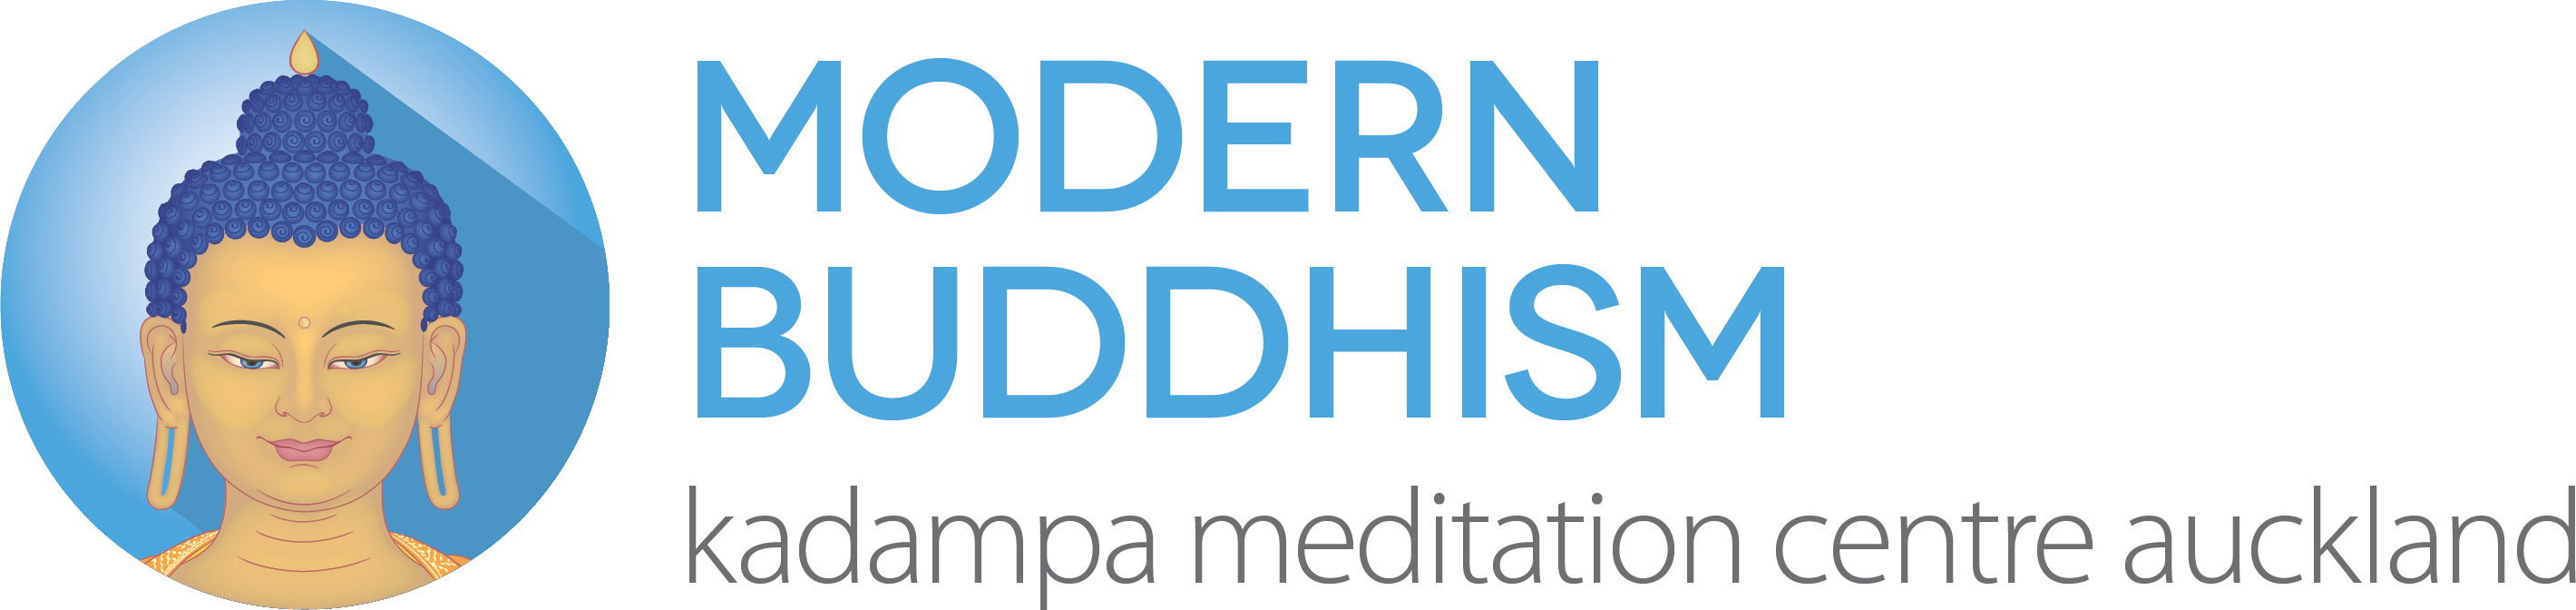 Compassion Kadampa Buddhist Centre Image